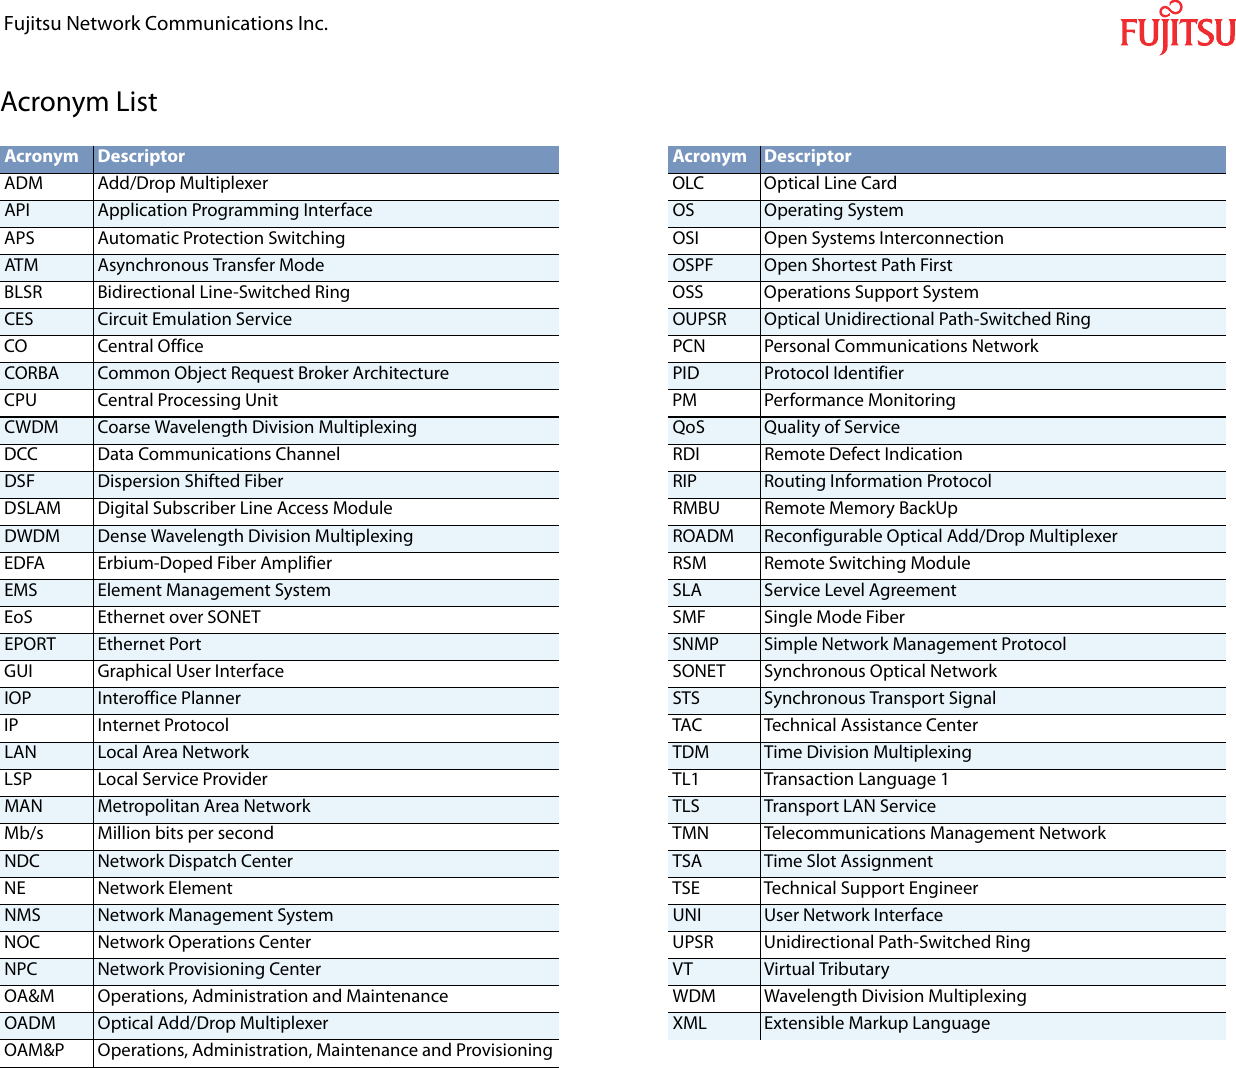 Page 1 of 1 - Fujitsu Acronym_List Acronym List